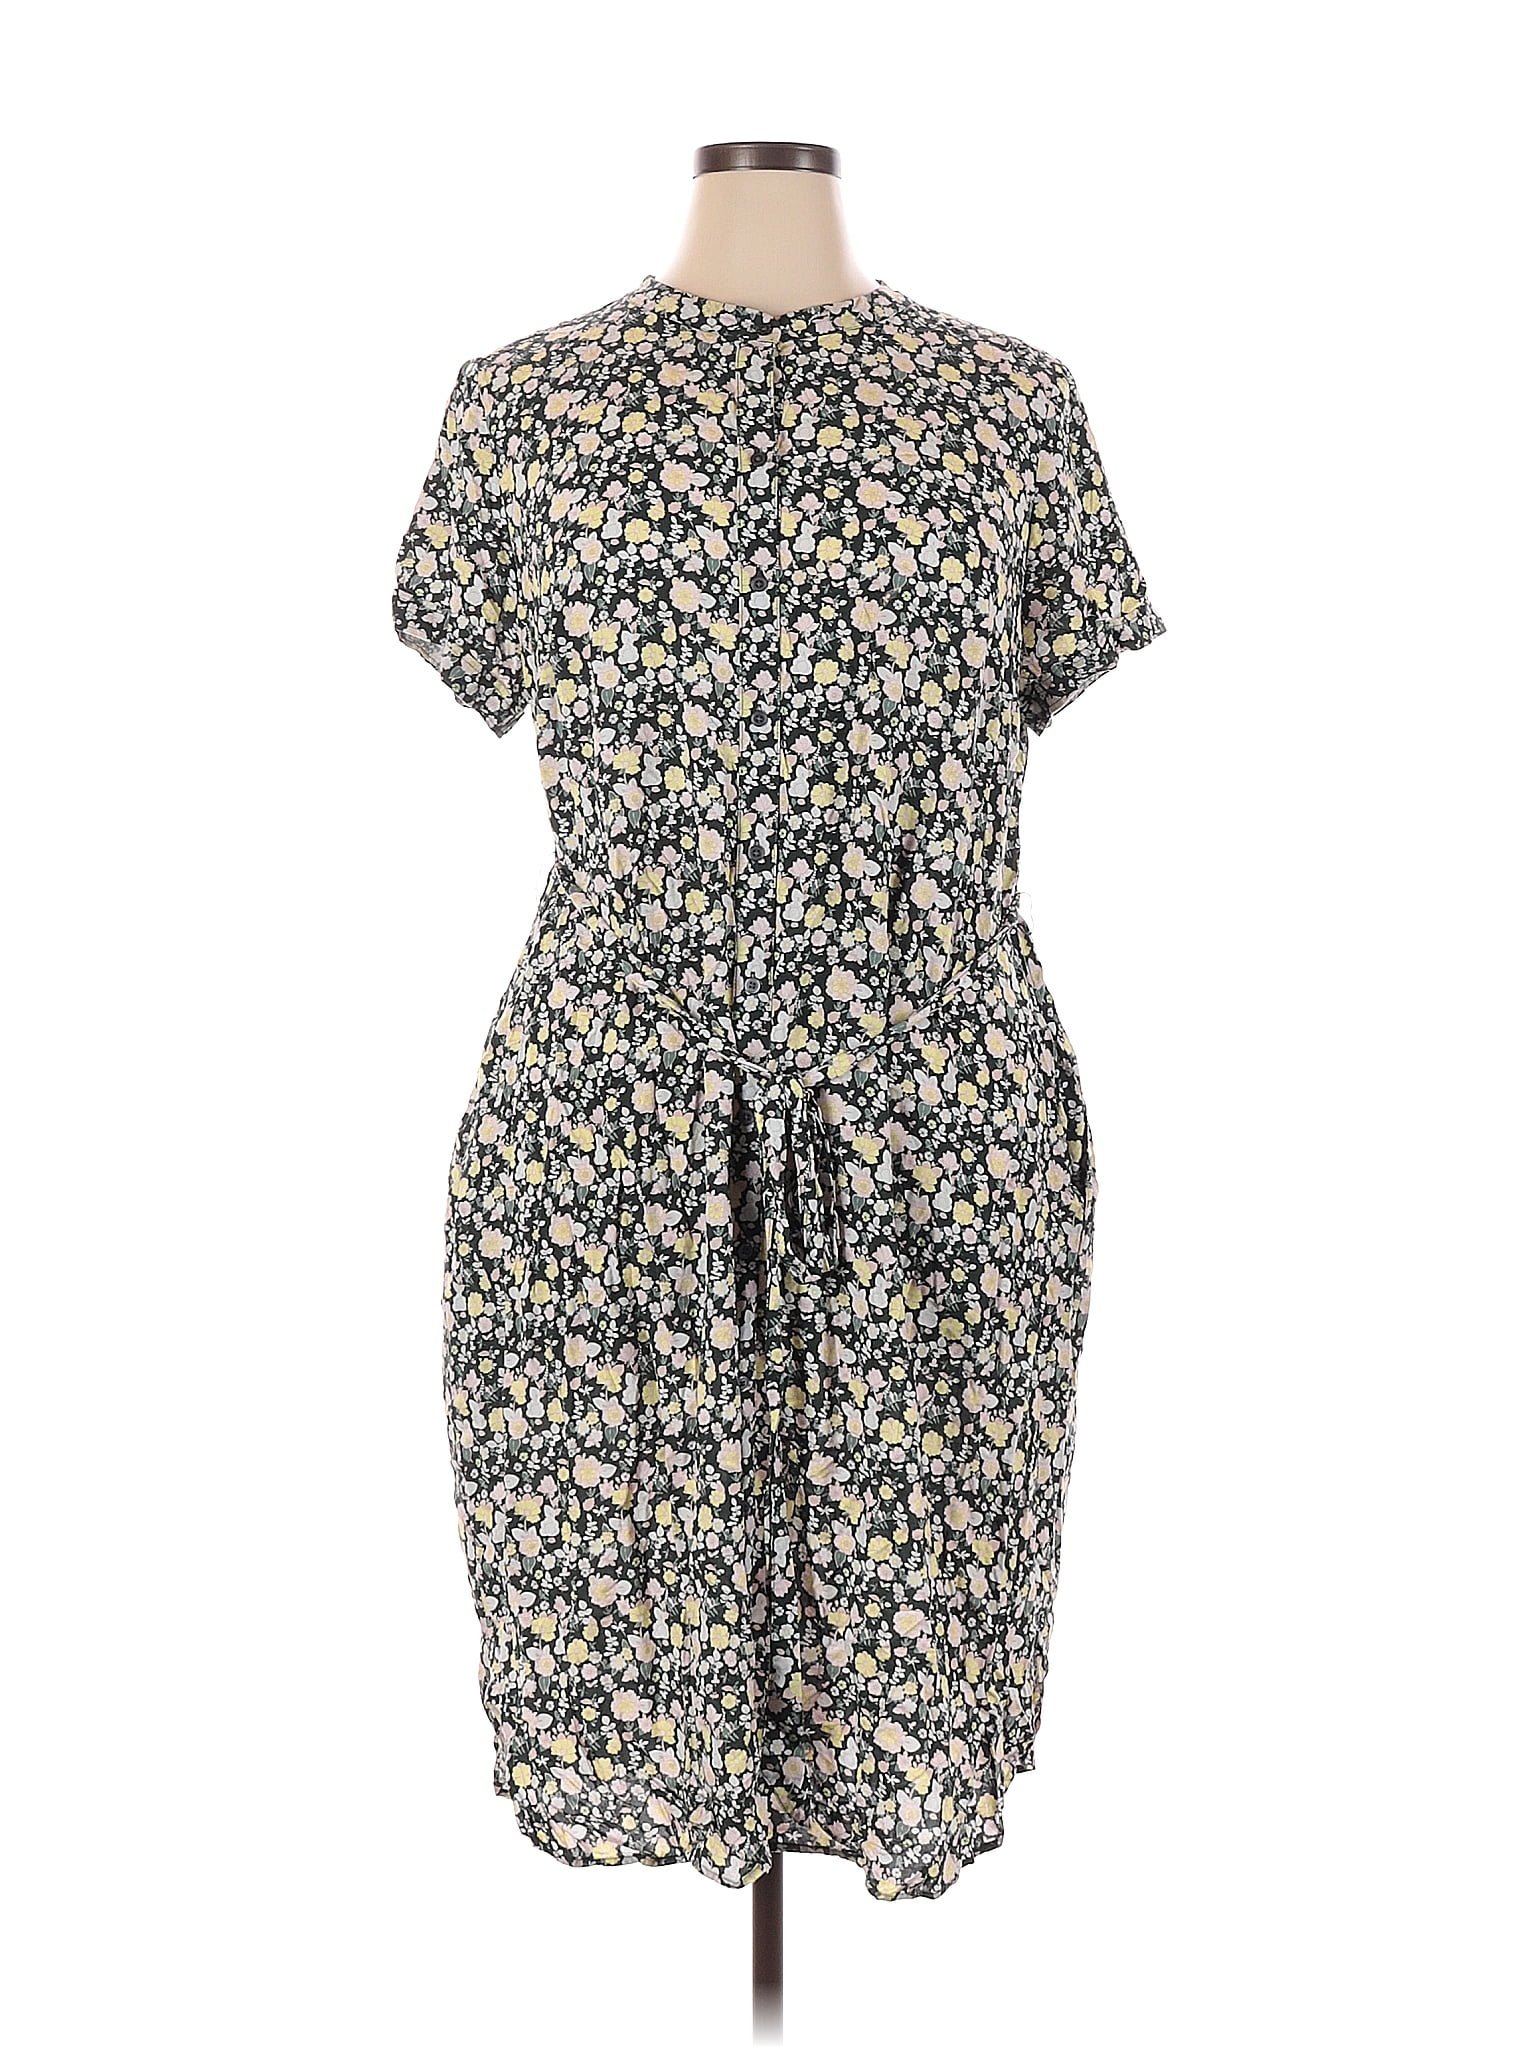 Ann Taylor LOFT 100% Rayon Floral Multi Color Gray Casual Dress Size 16 ...